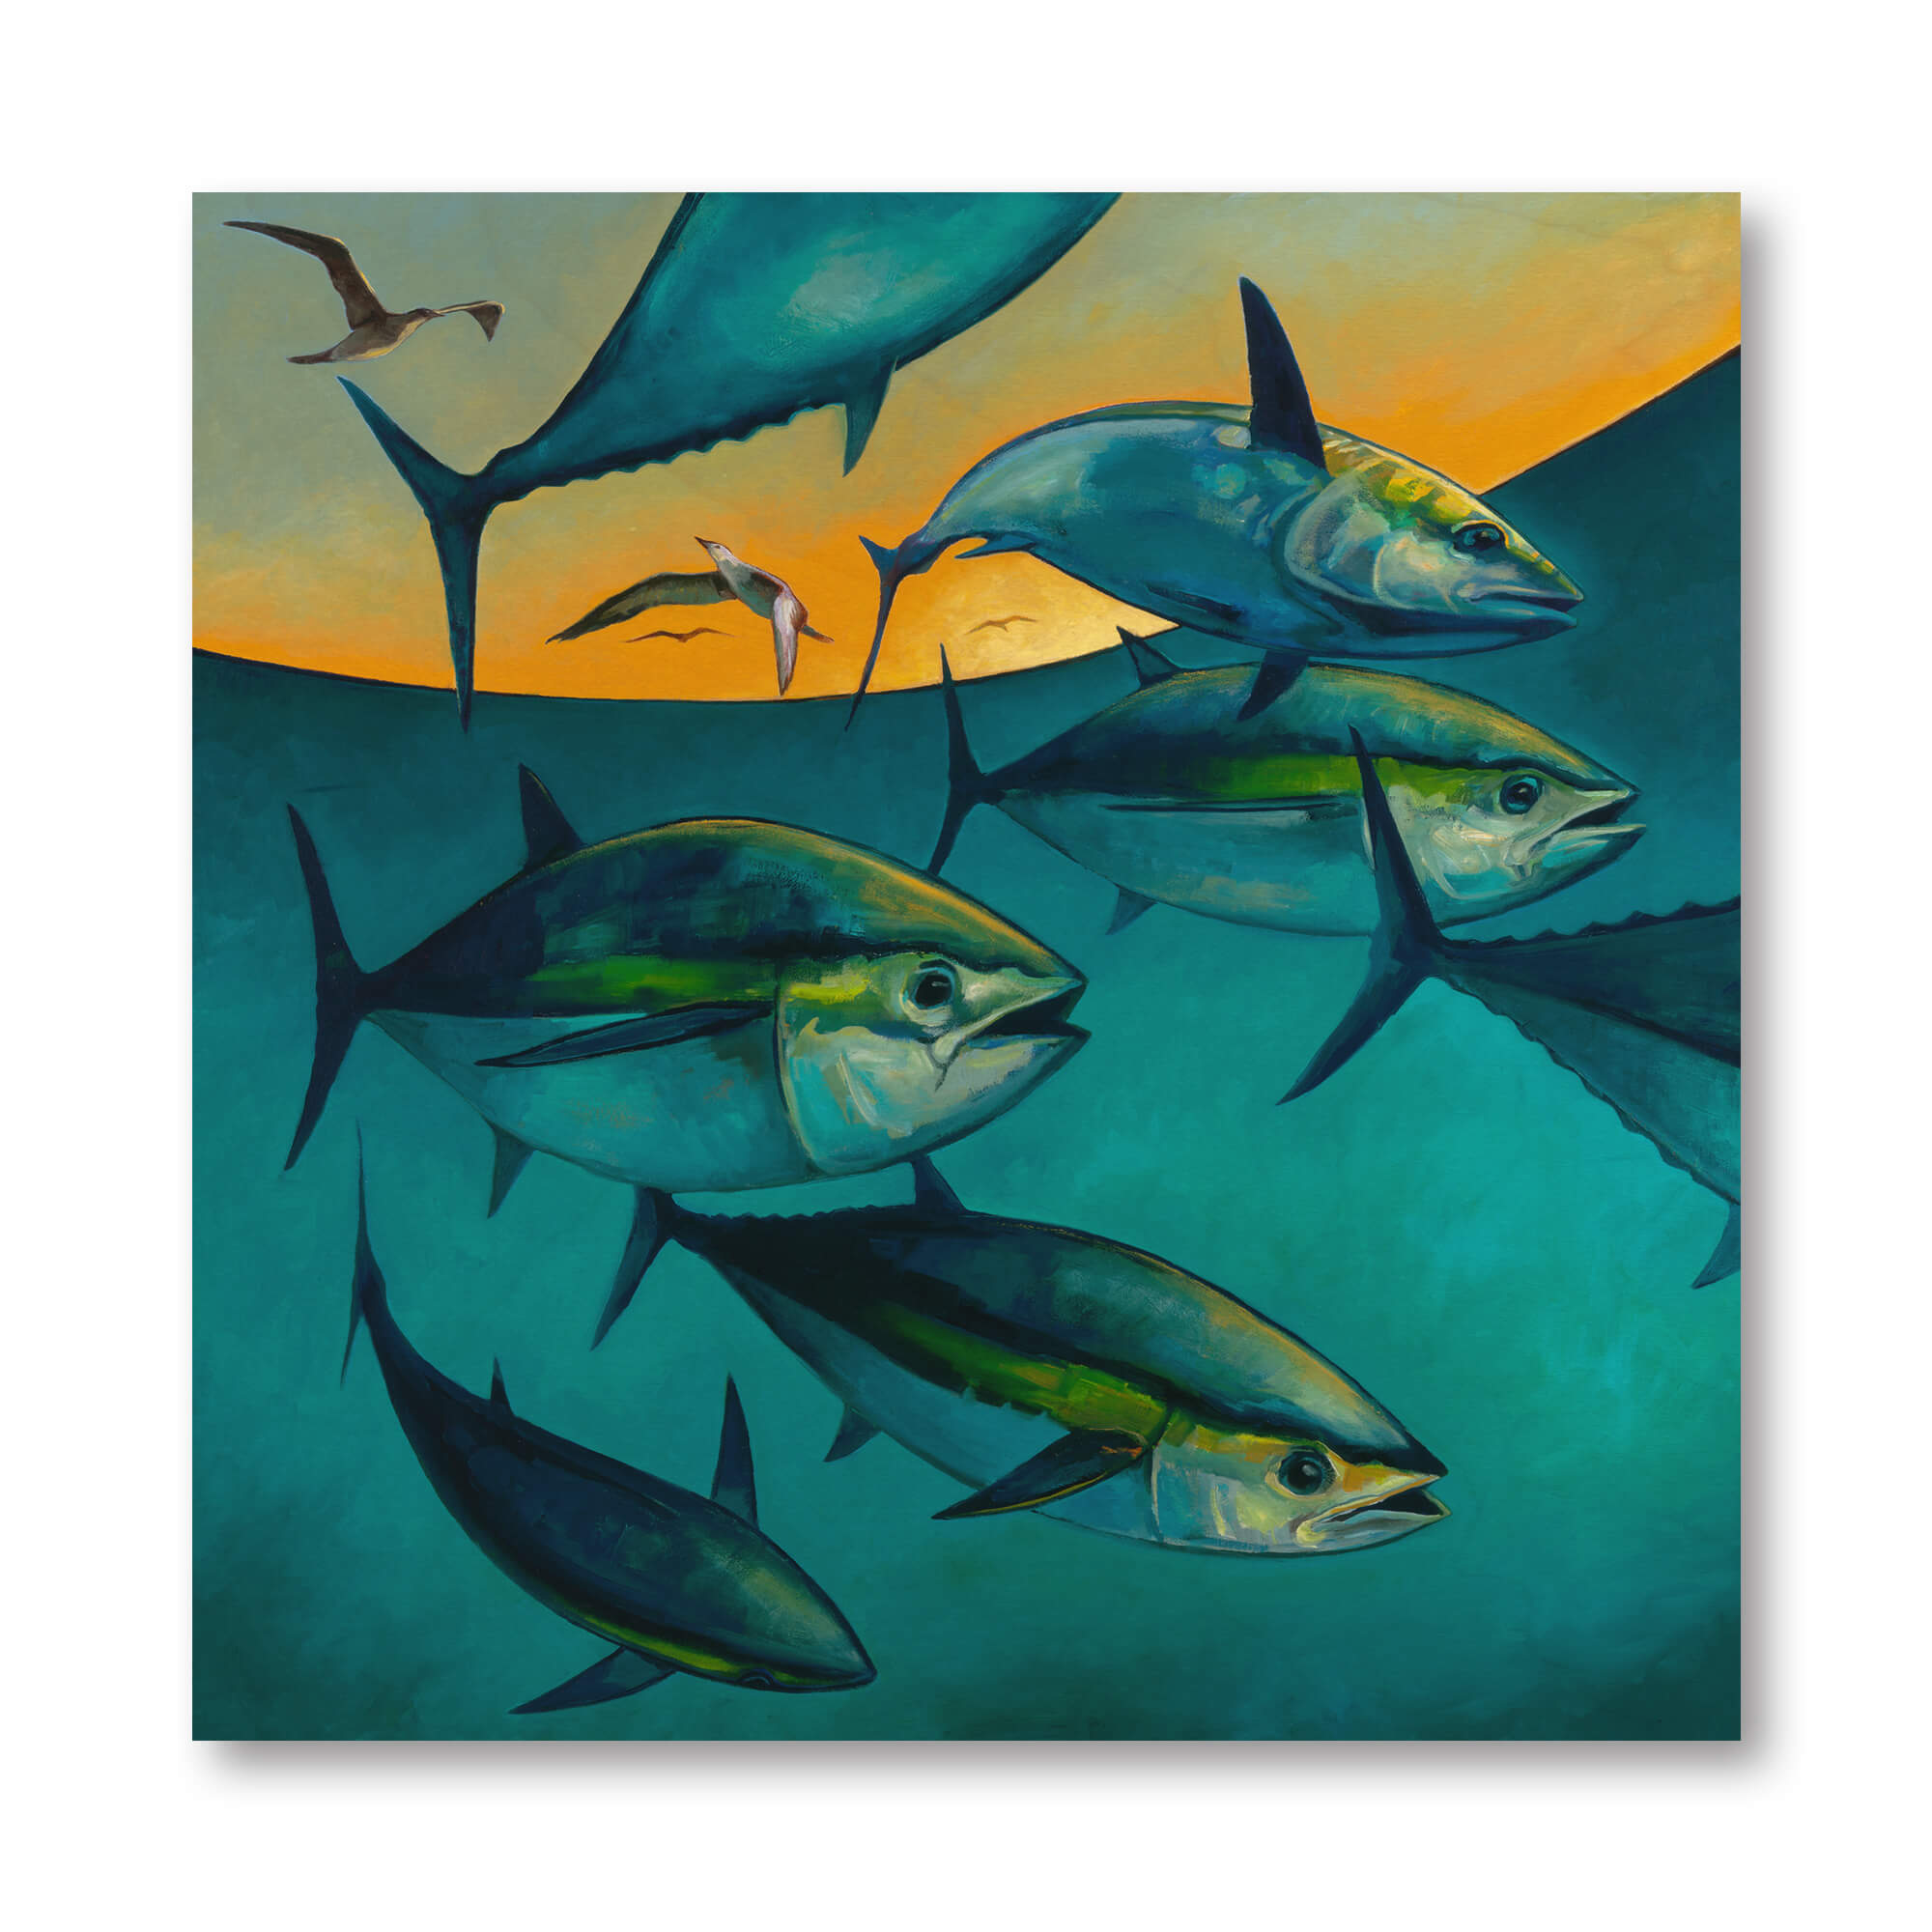 A school of tuna fish by Hawaii artist Colin Redican